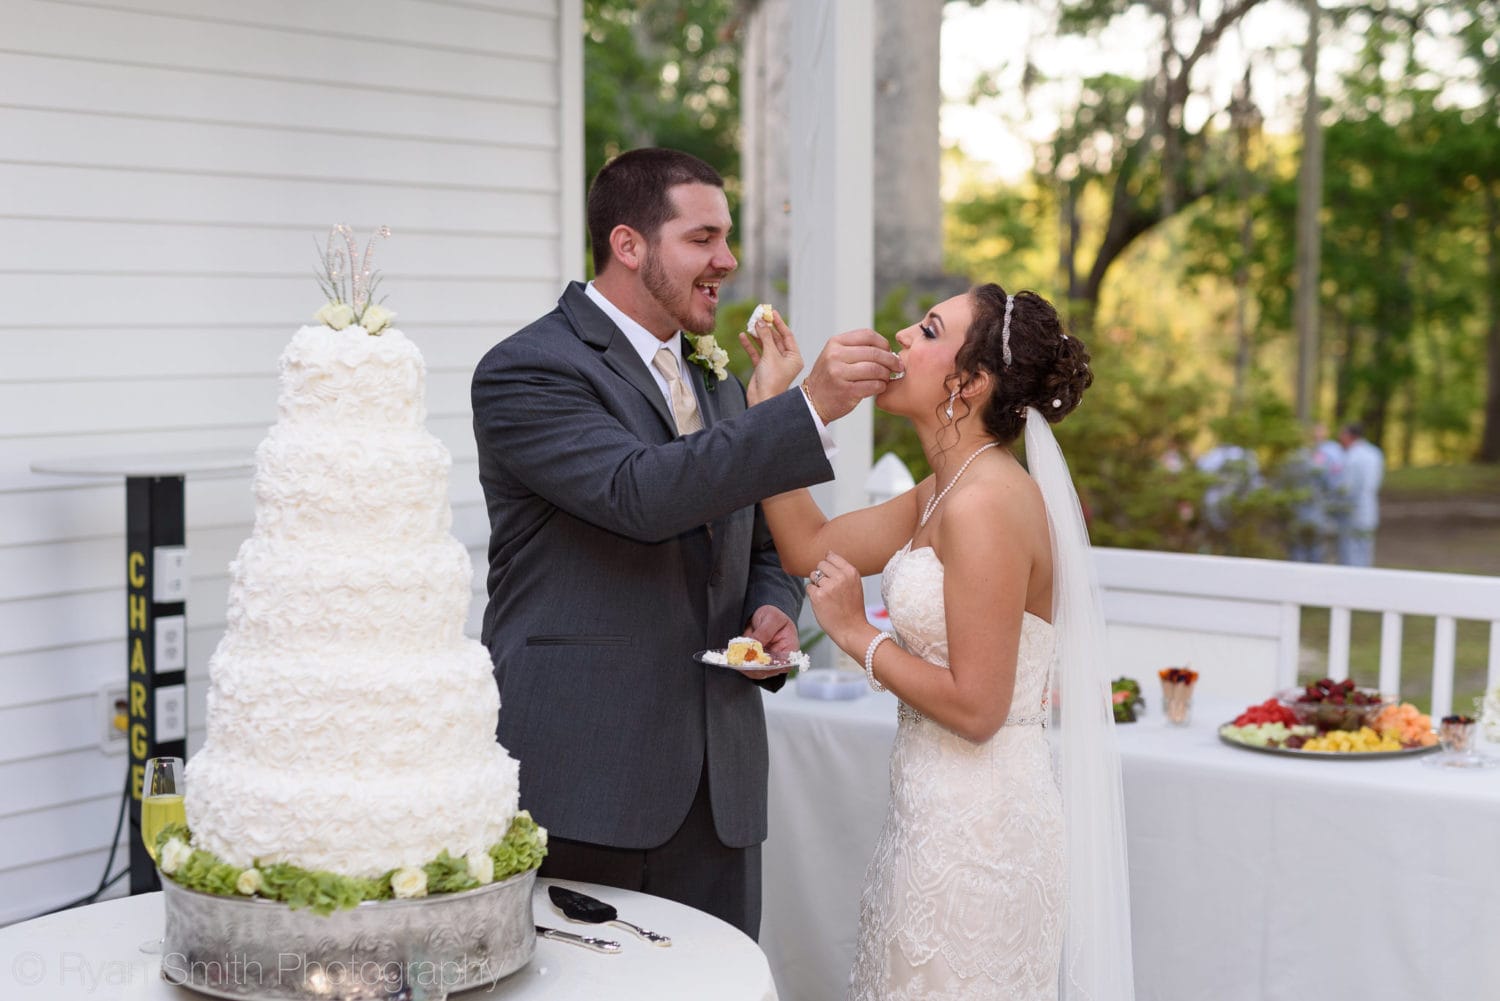 Bride and groom feeding each other wedding cake - Upper Mill Plantation